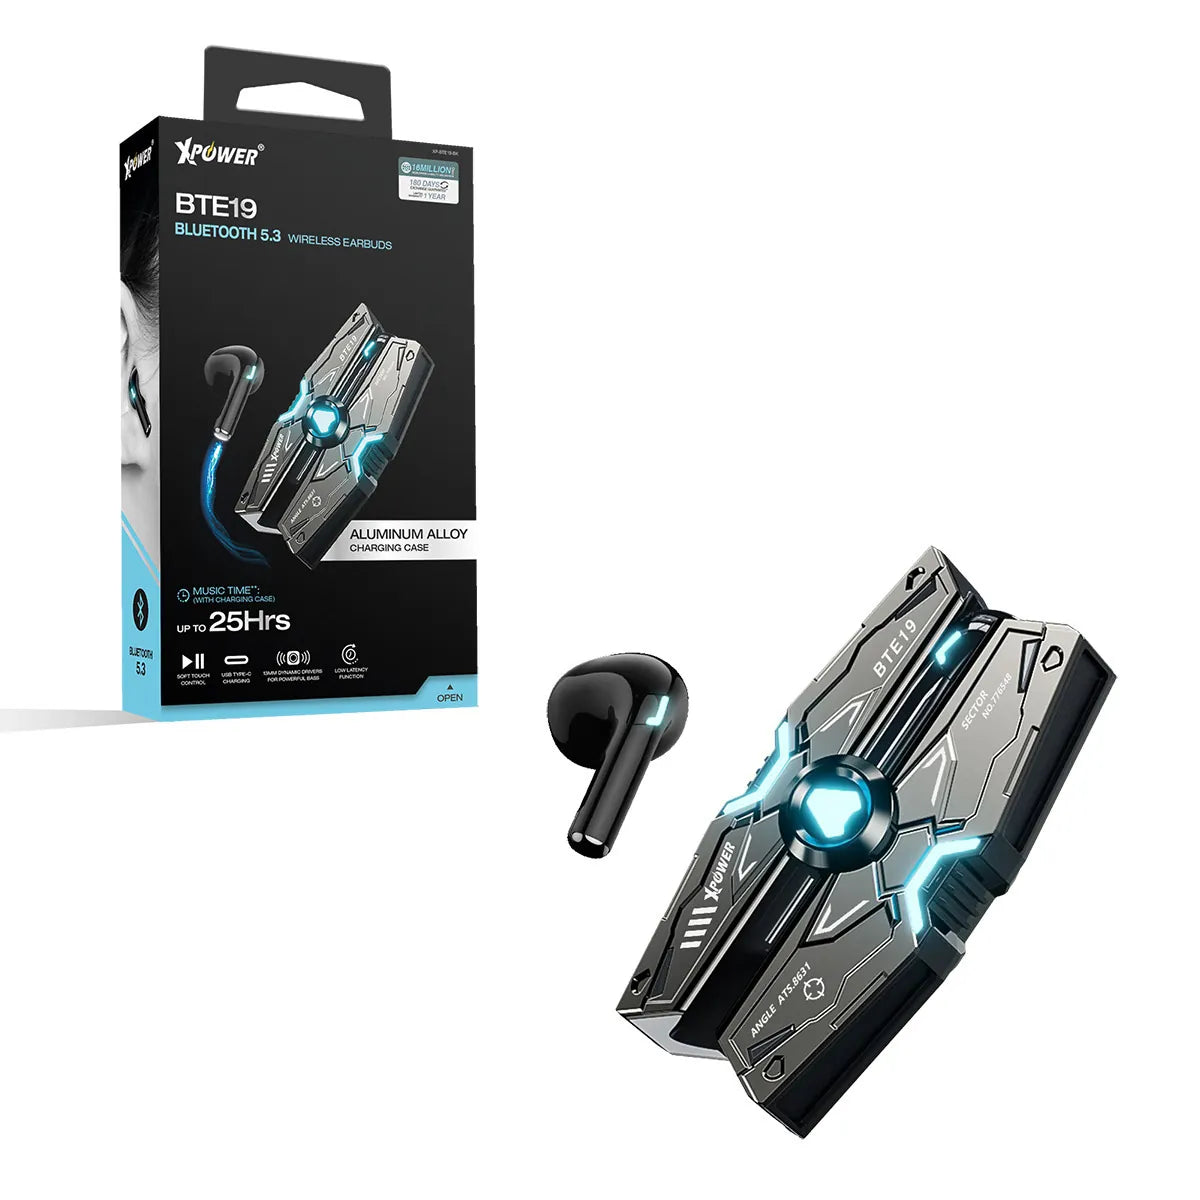 XPower BTE19 Bluetooth 5.3 Wireless Earbuds - Black